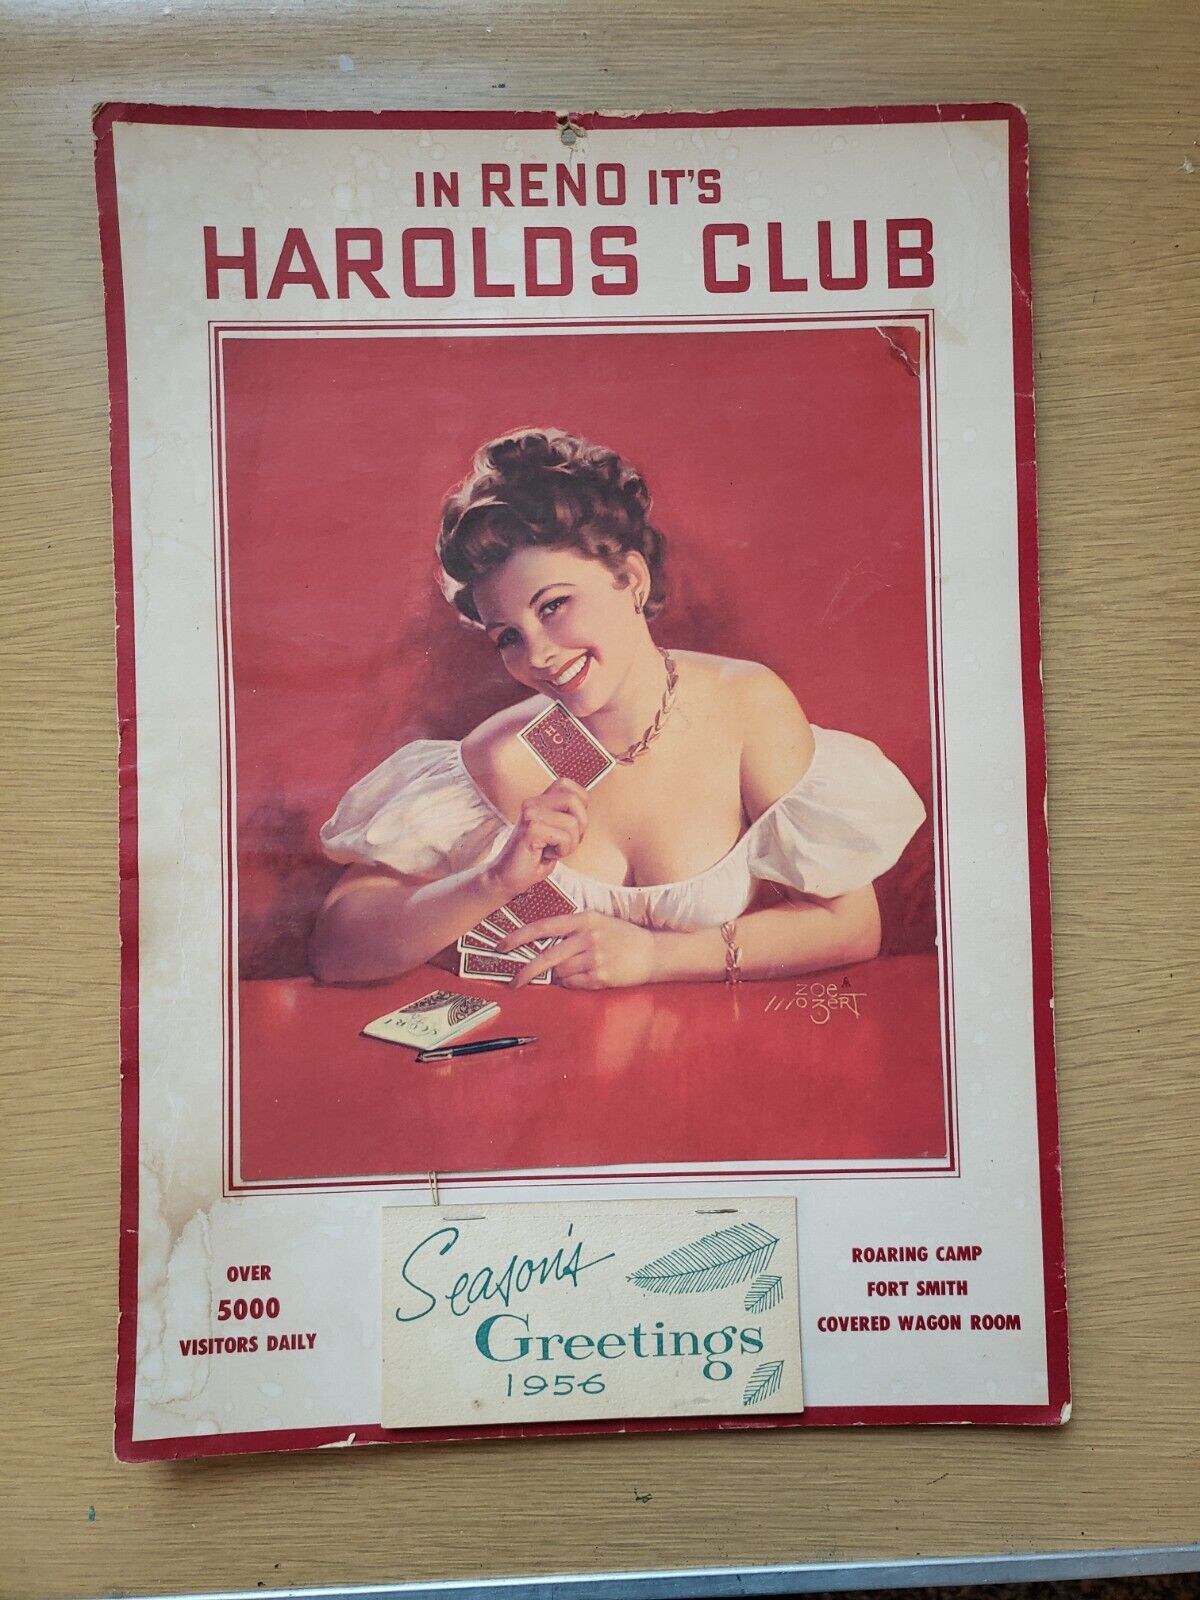 Calendar Pinup Girl 1956 Harold’s Club Reno - Gambling Casino Water Stains RARE